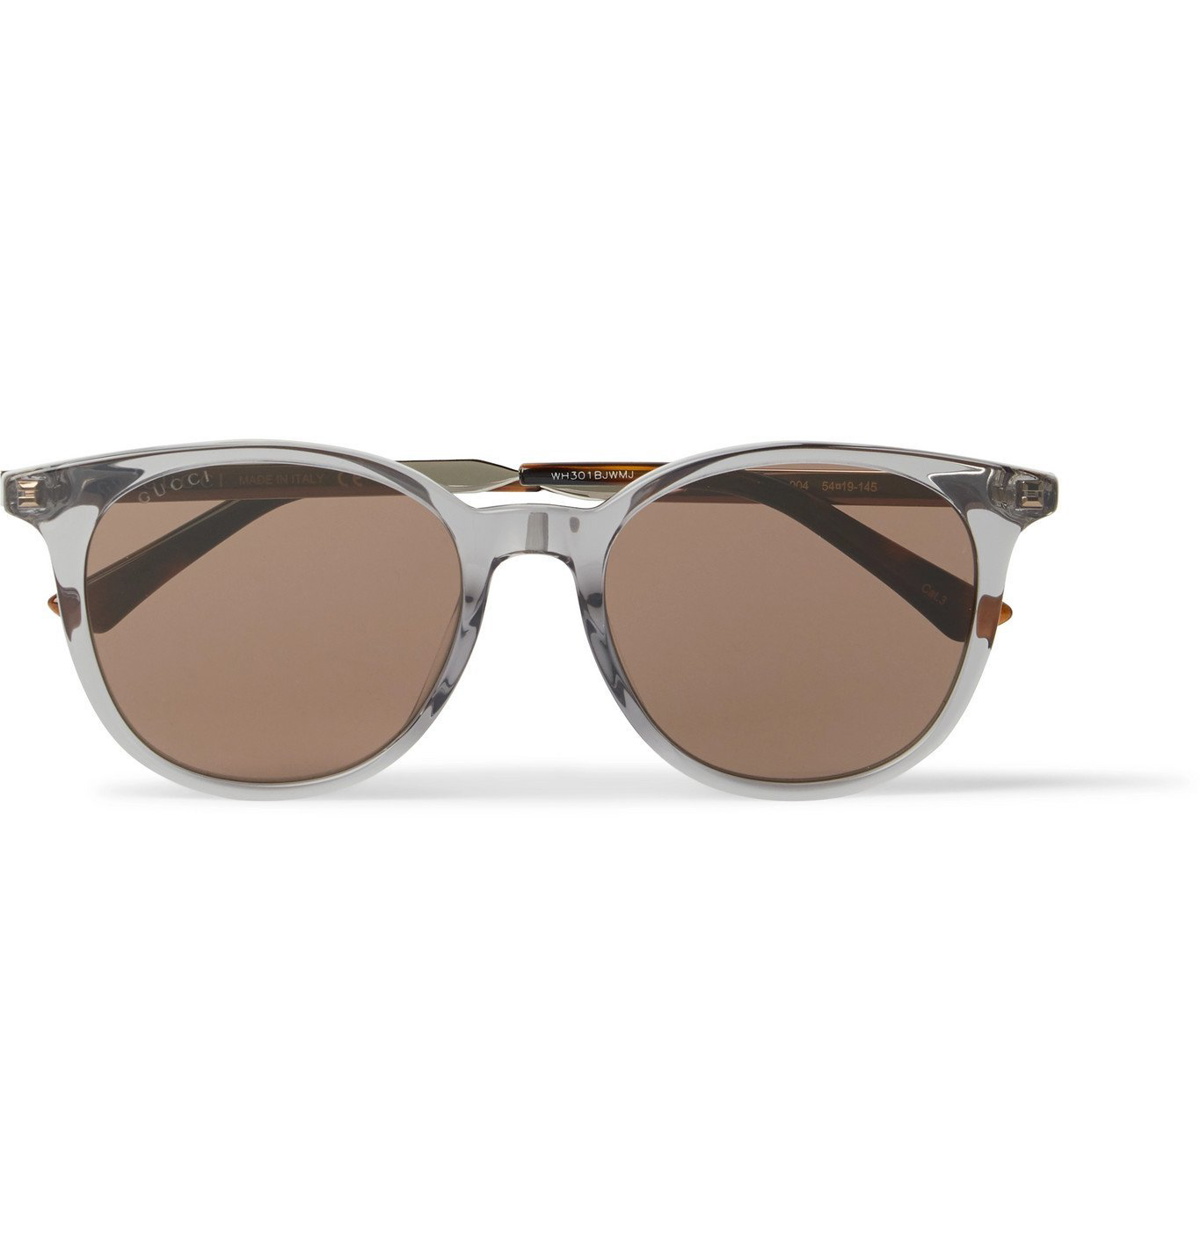 Gucci Round-Frame Acetate Silver-Tone Sunglasses - Gucci